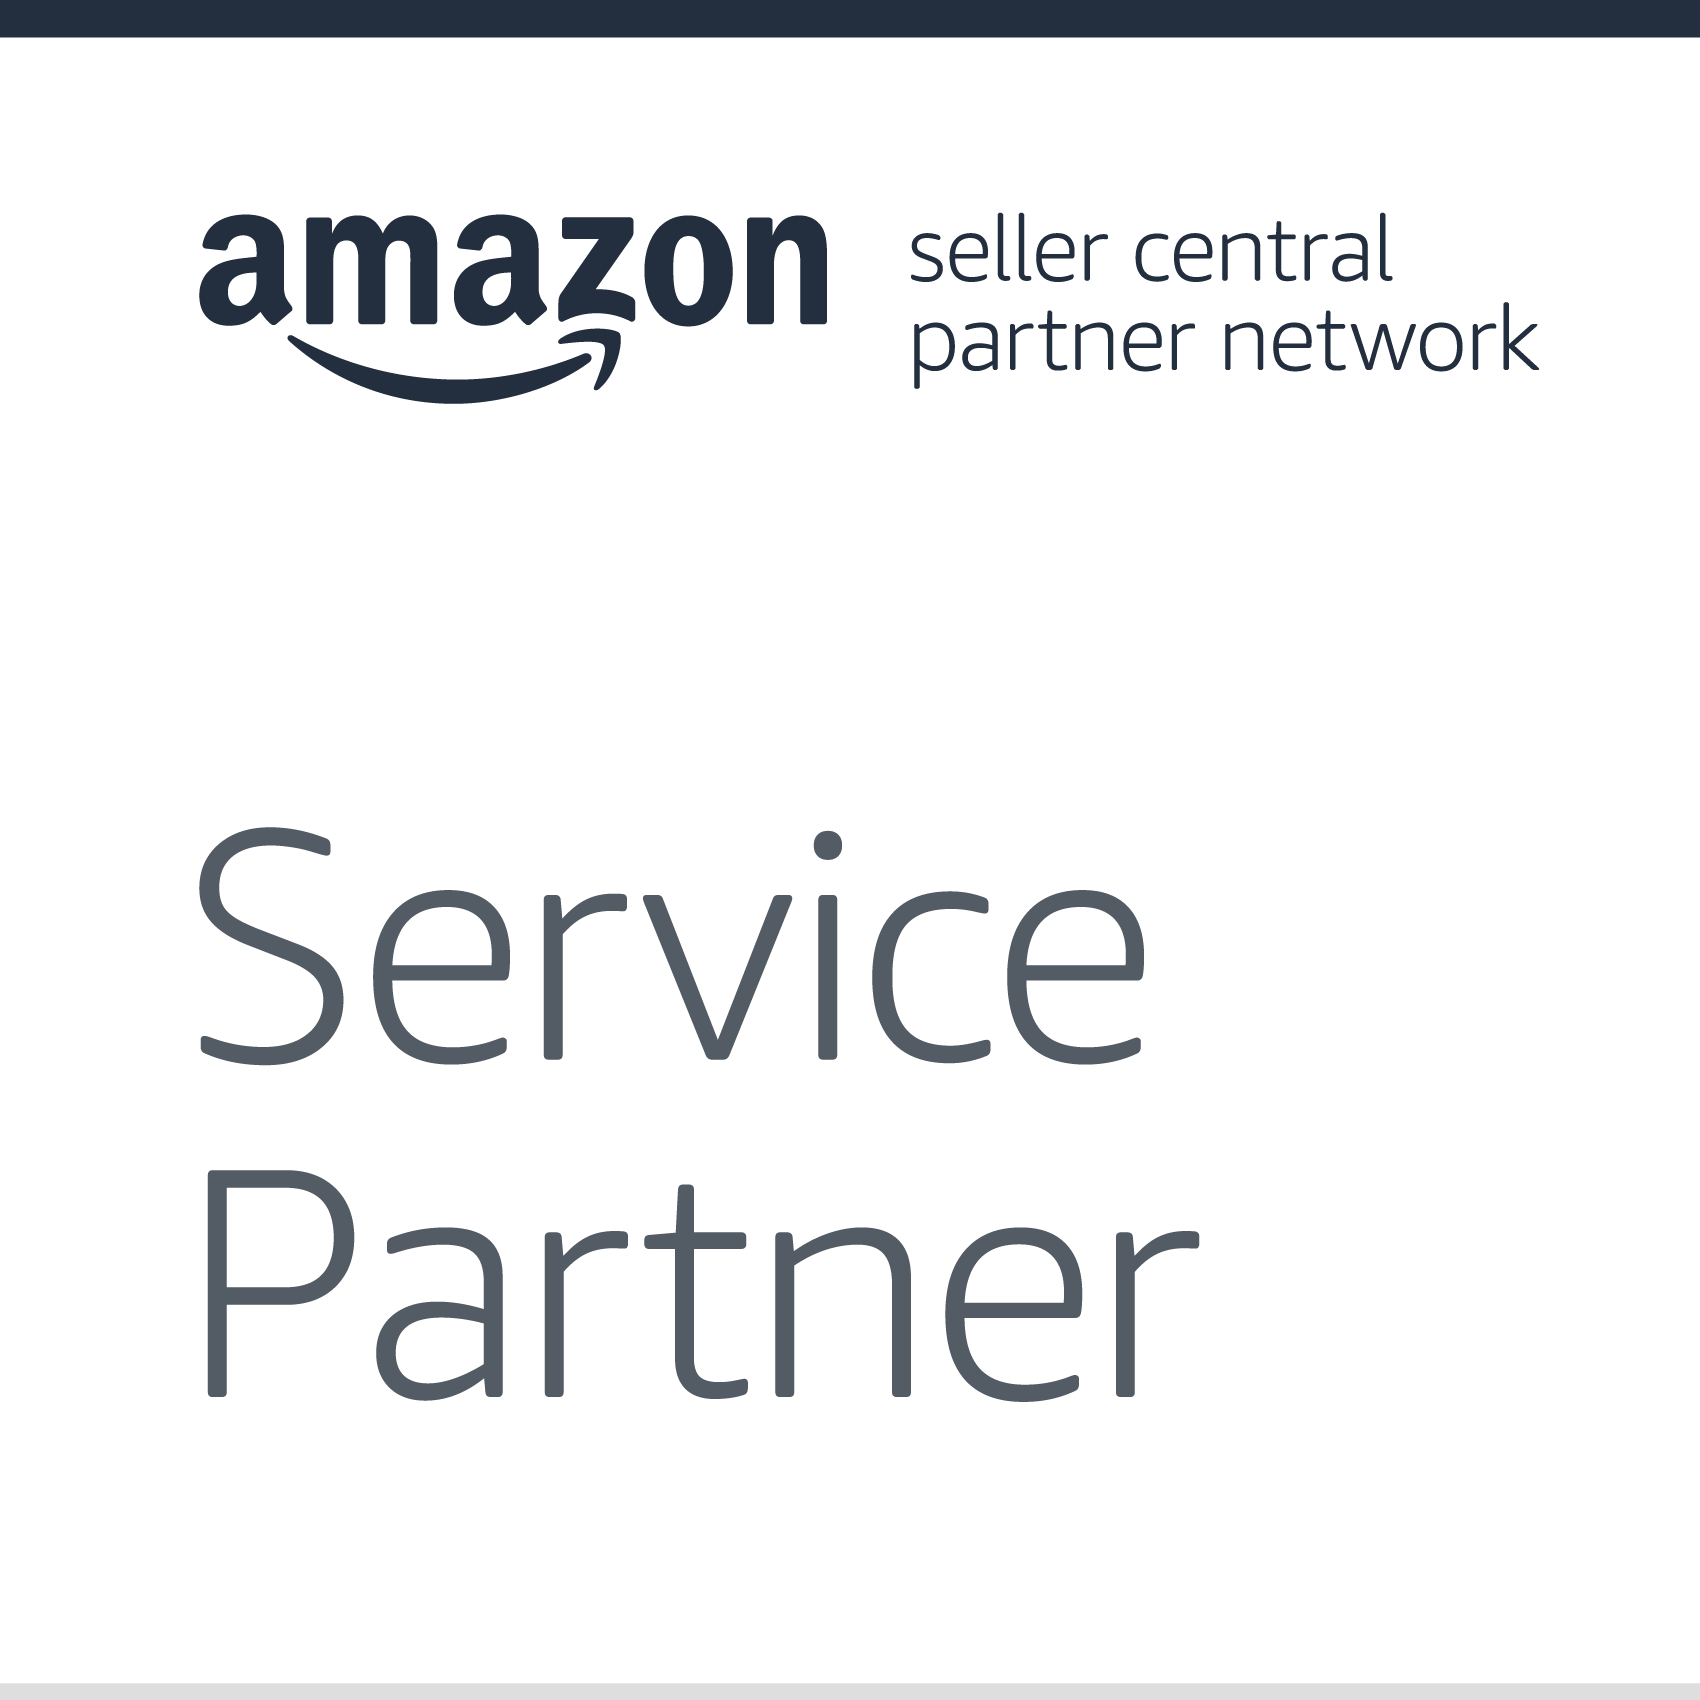 Amazon Provider Network